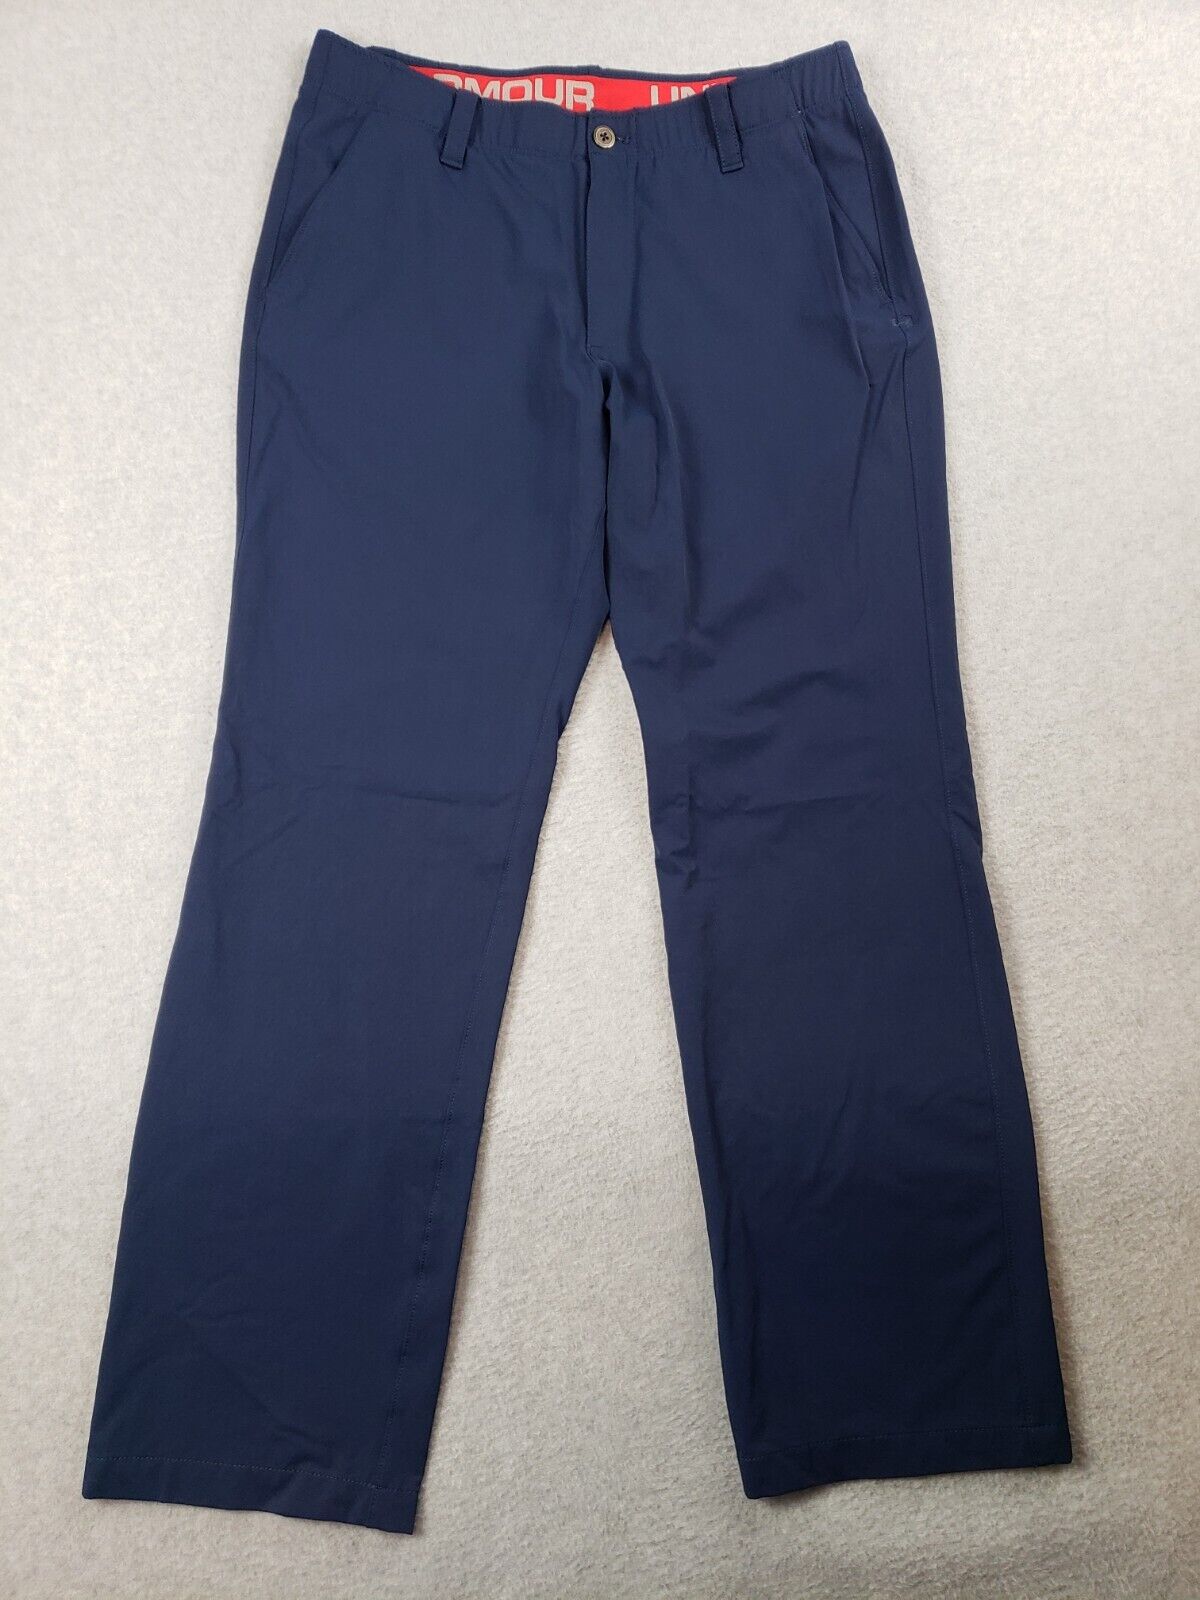 Size 36x32 Blue Loose Straight Leg Golf Pants